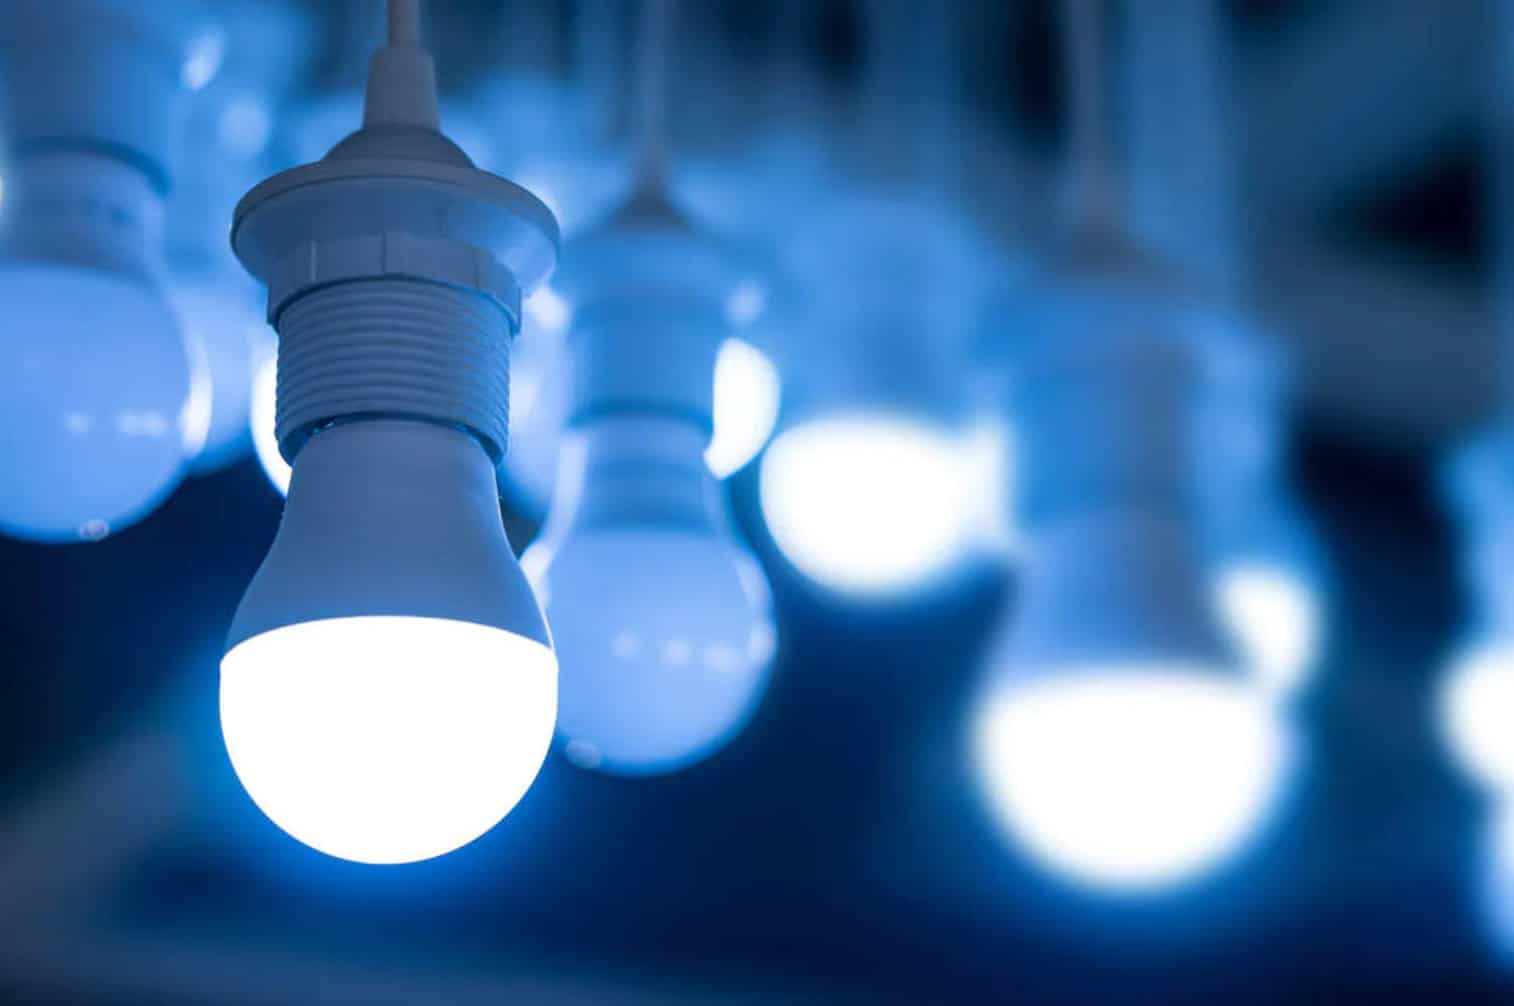 led vs incandescent bulbs